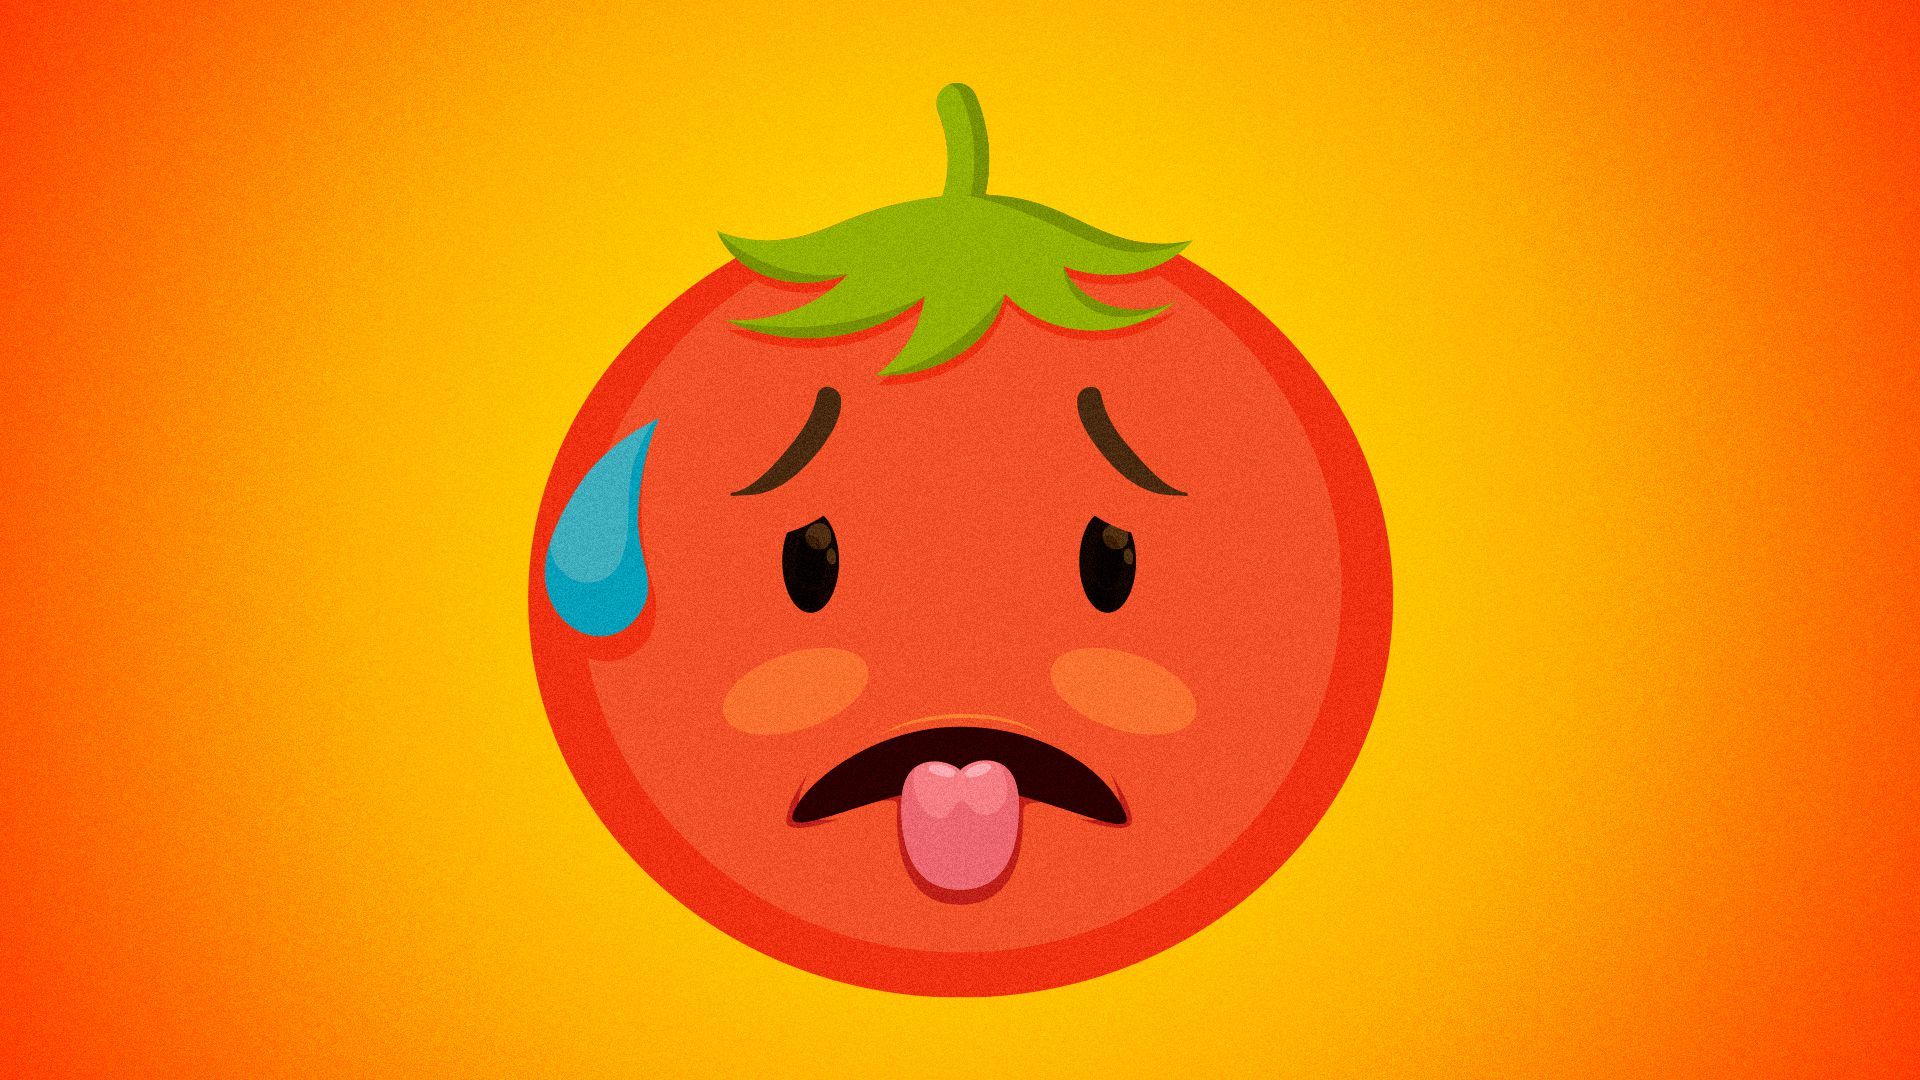 Illustration of a hot tomato emoji.